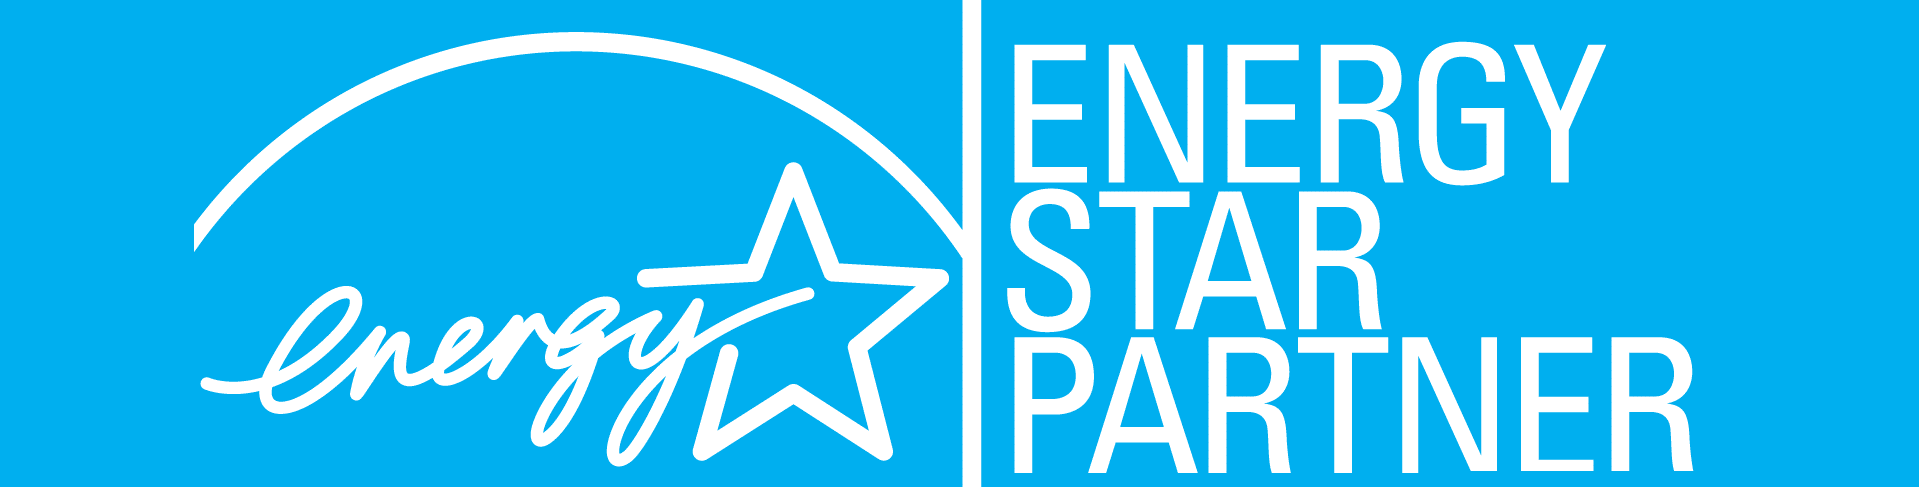 energy star banner 2